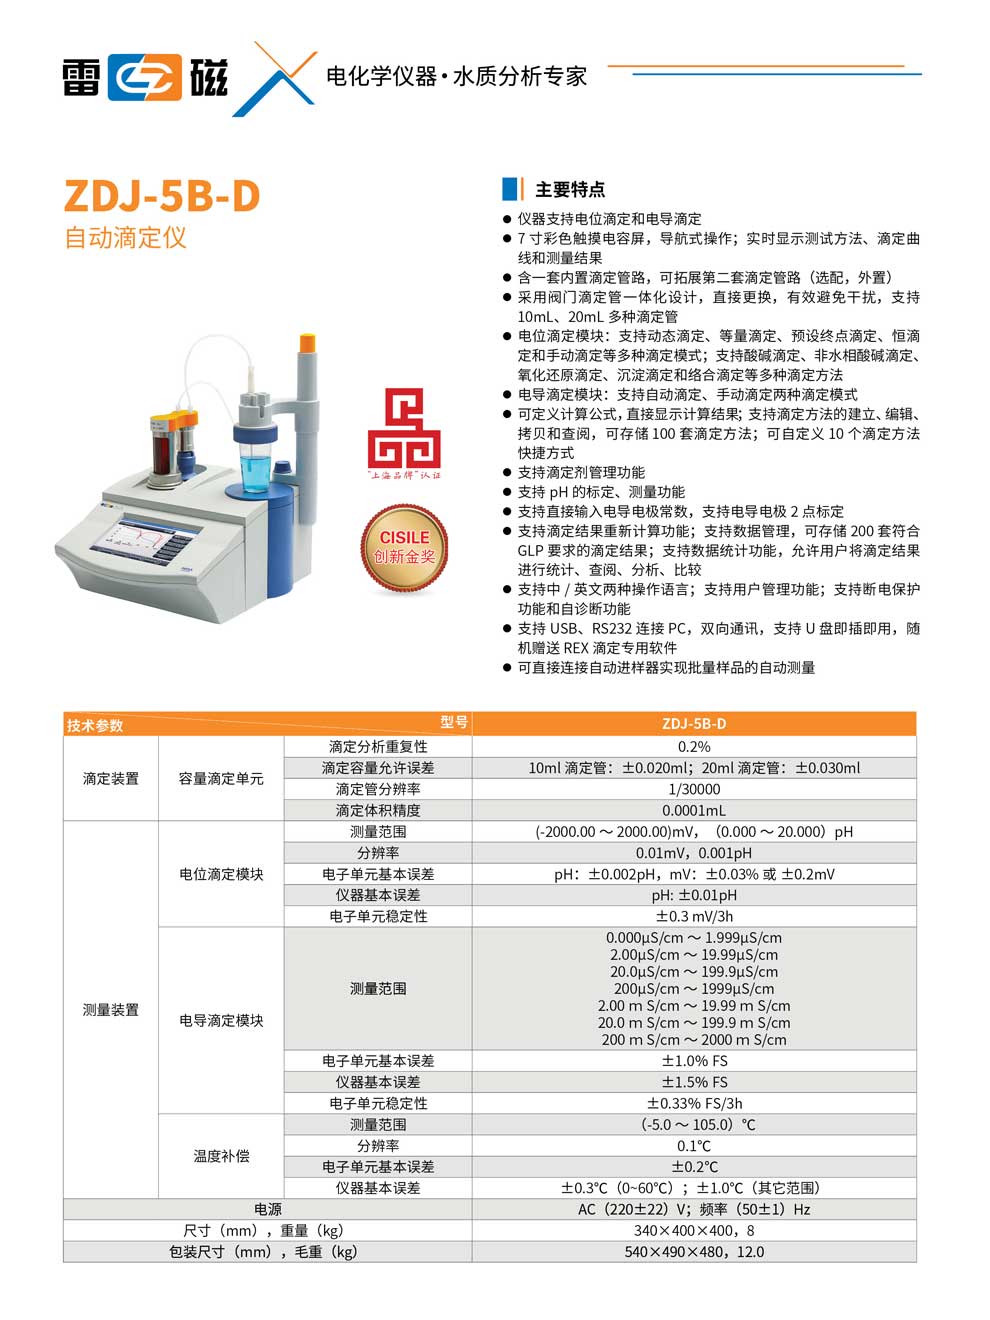 ZDJ-5B-D-彩页.jpg